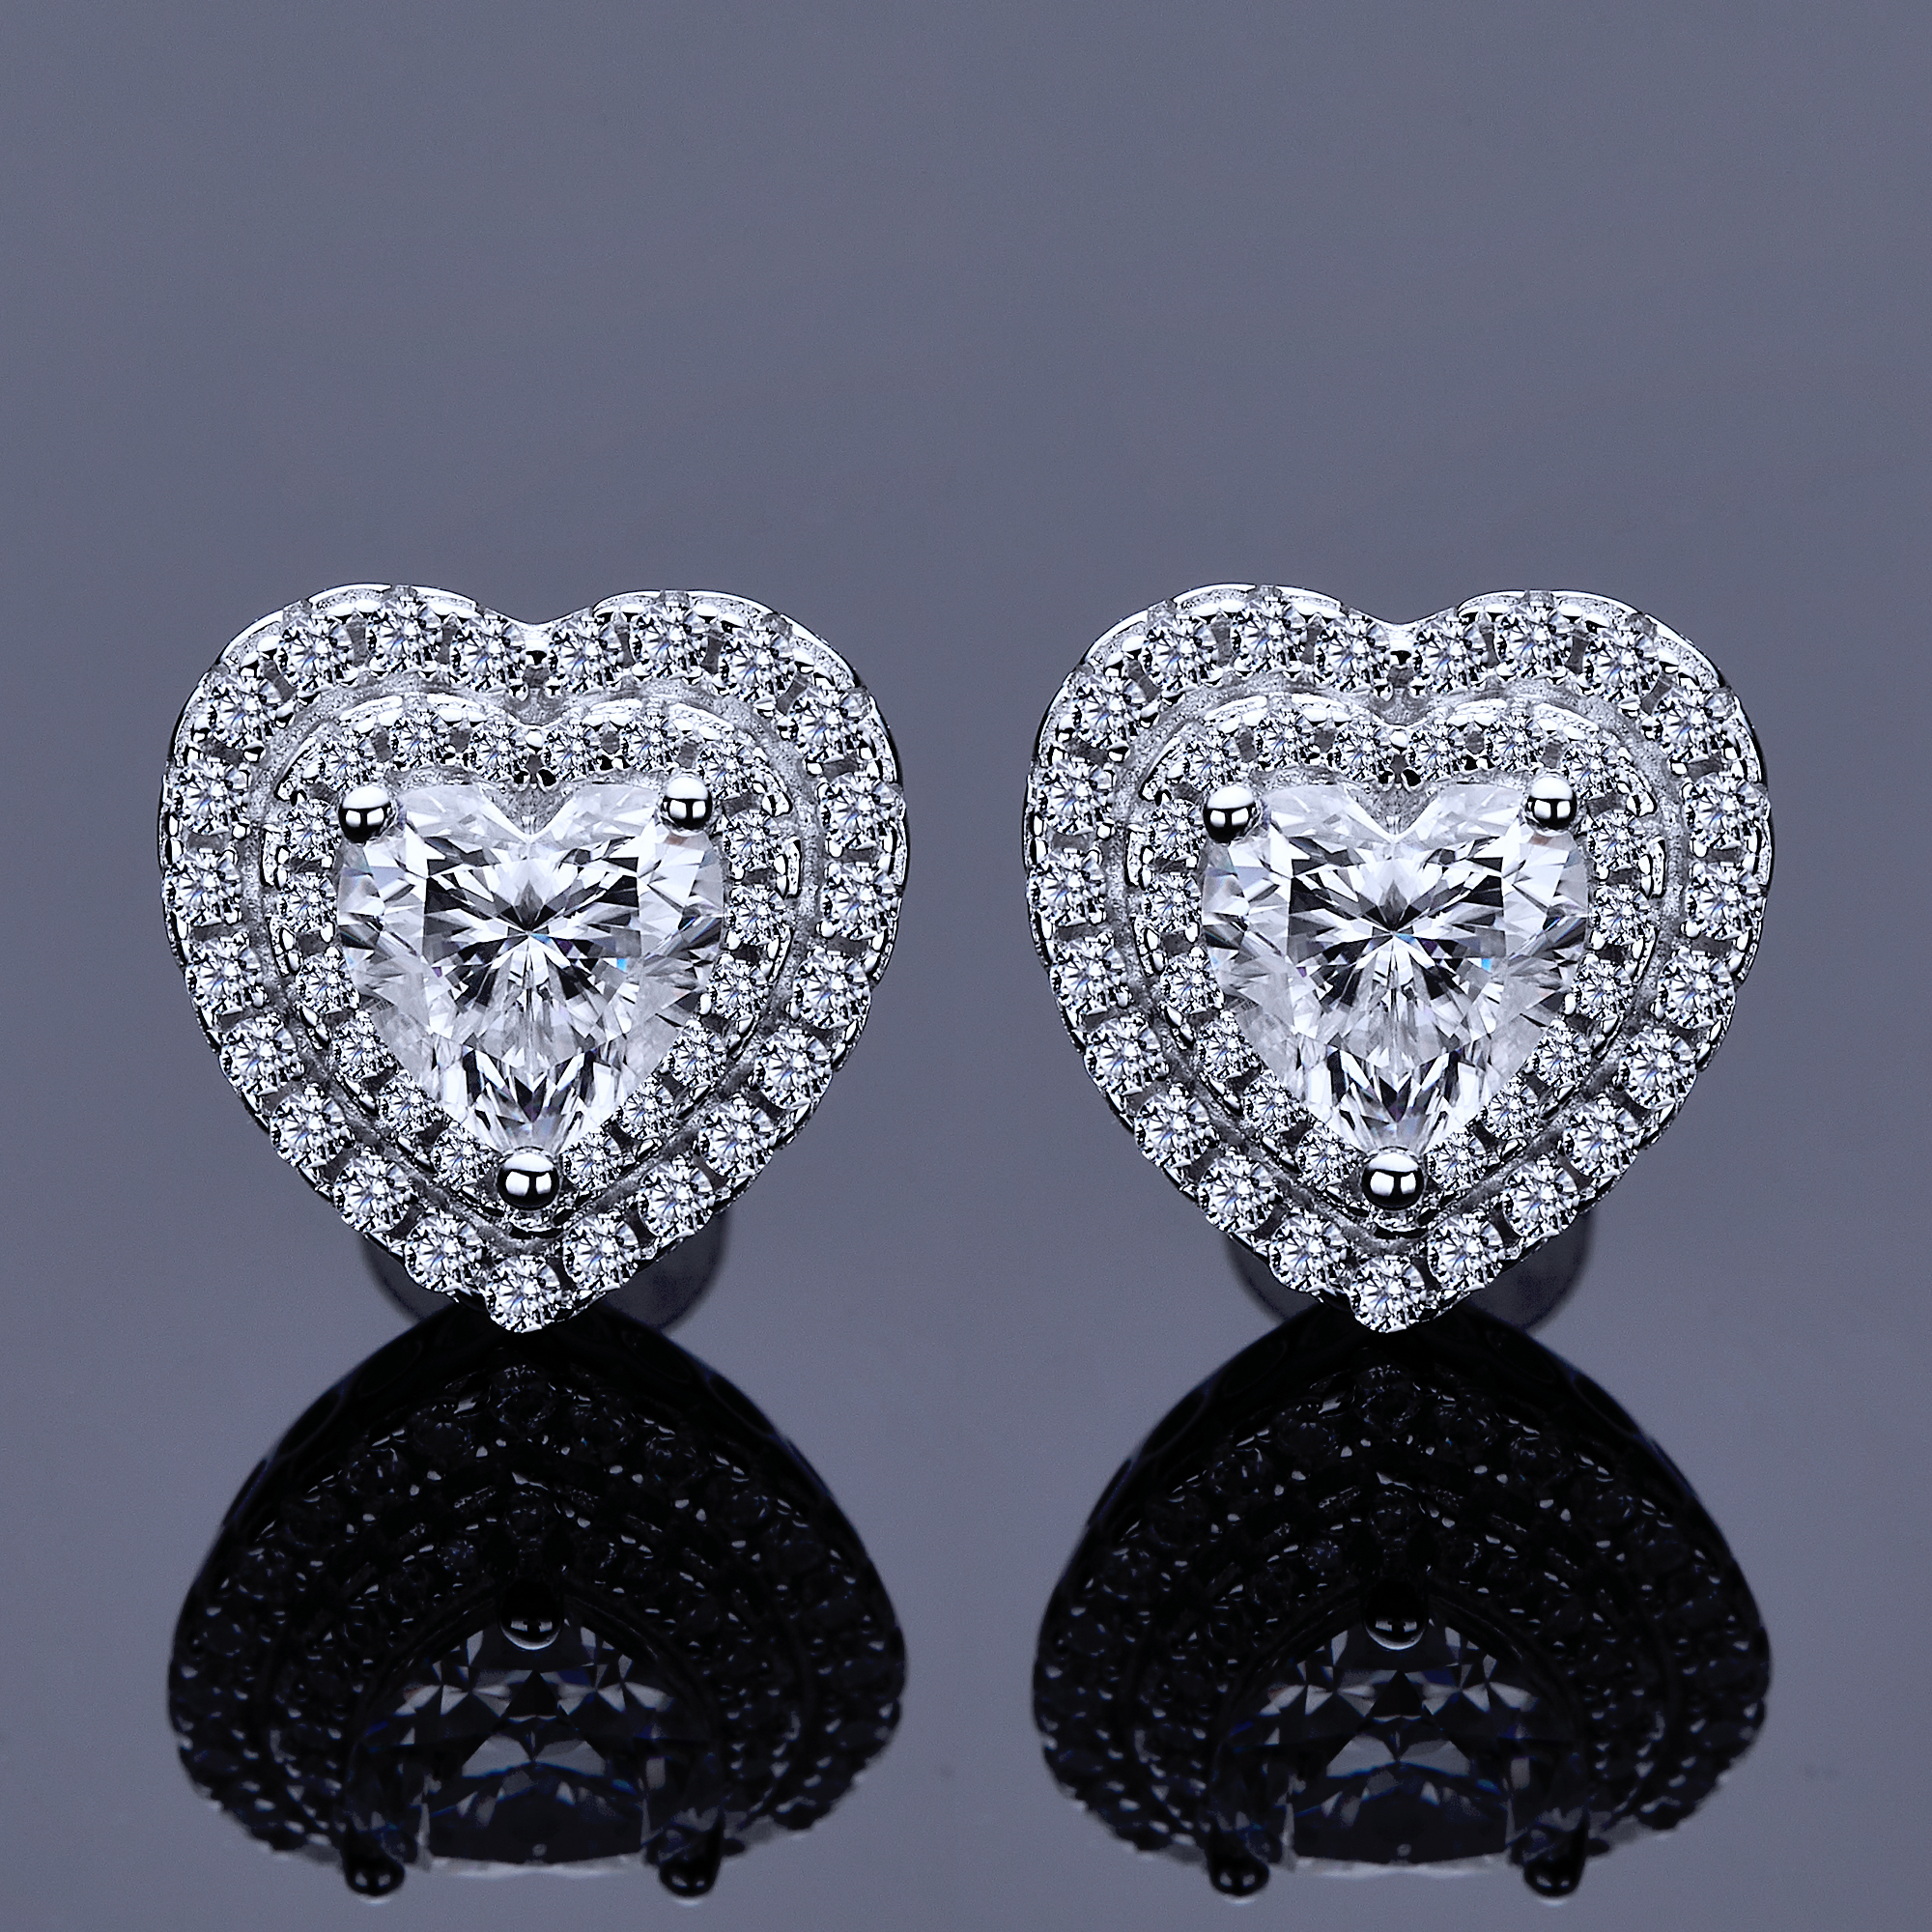 Double Halo Design Onedia® Classic Heart Shape Moissanite Jewelry Set in Silver